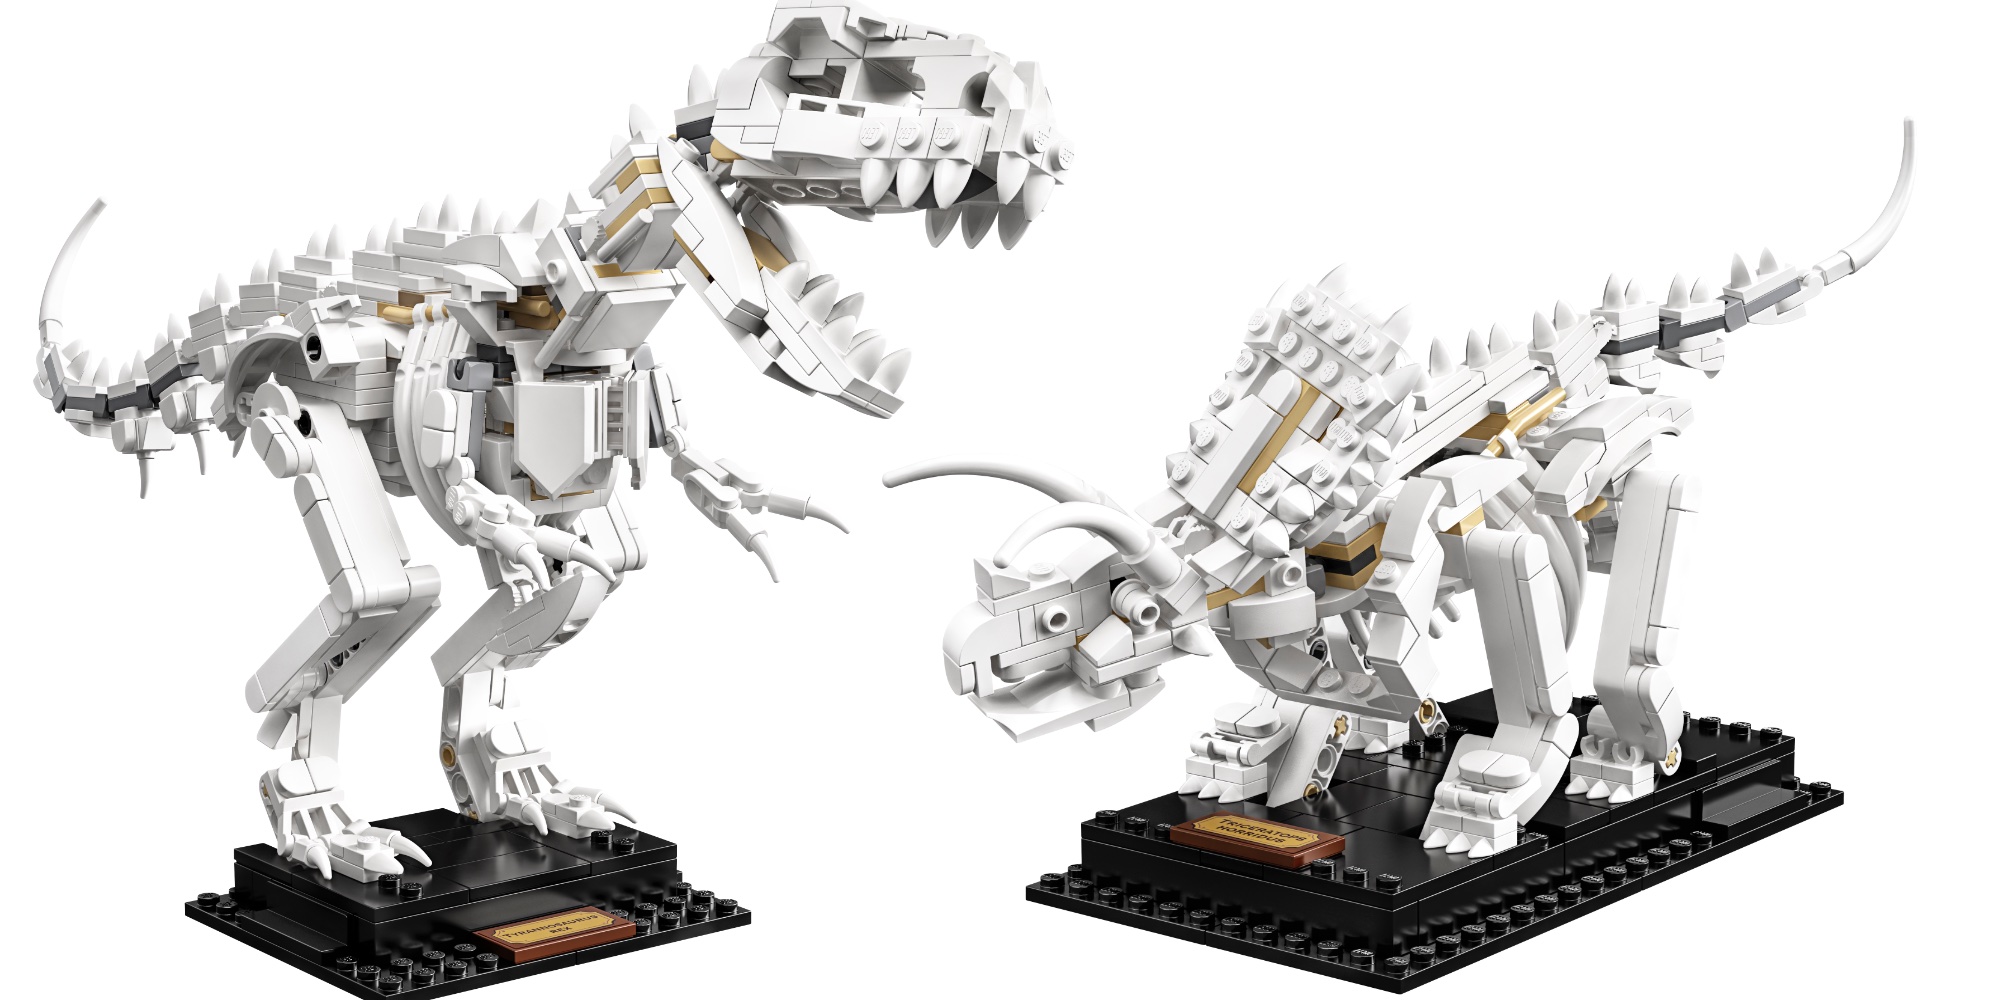 LEGO Ideas Dinosaur Fossils kit debuts three prehistoric builds - 9to5Toys